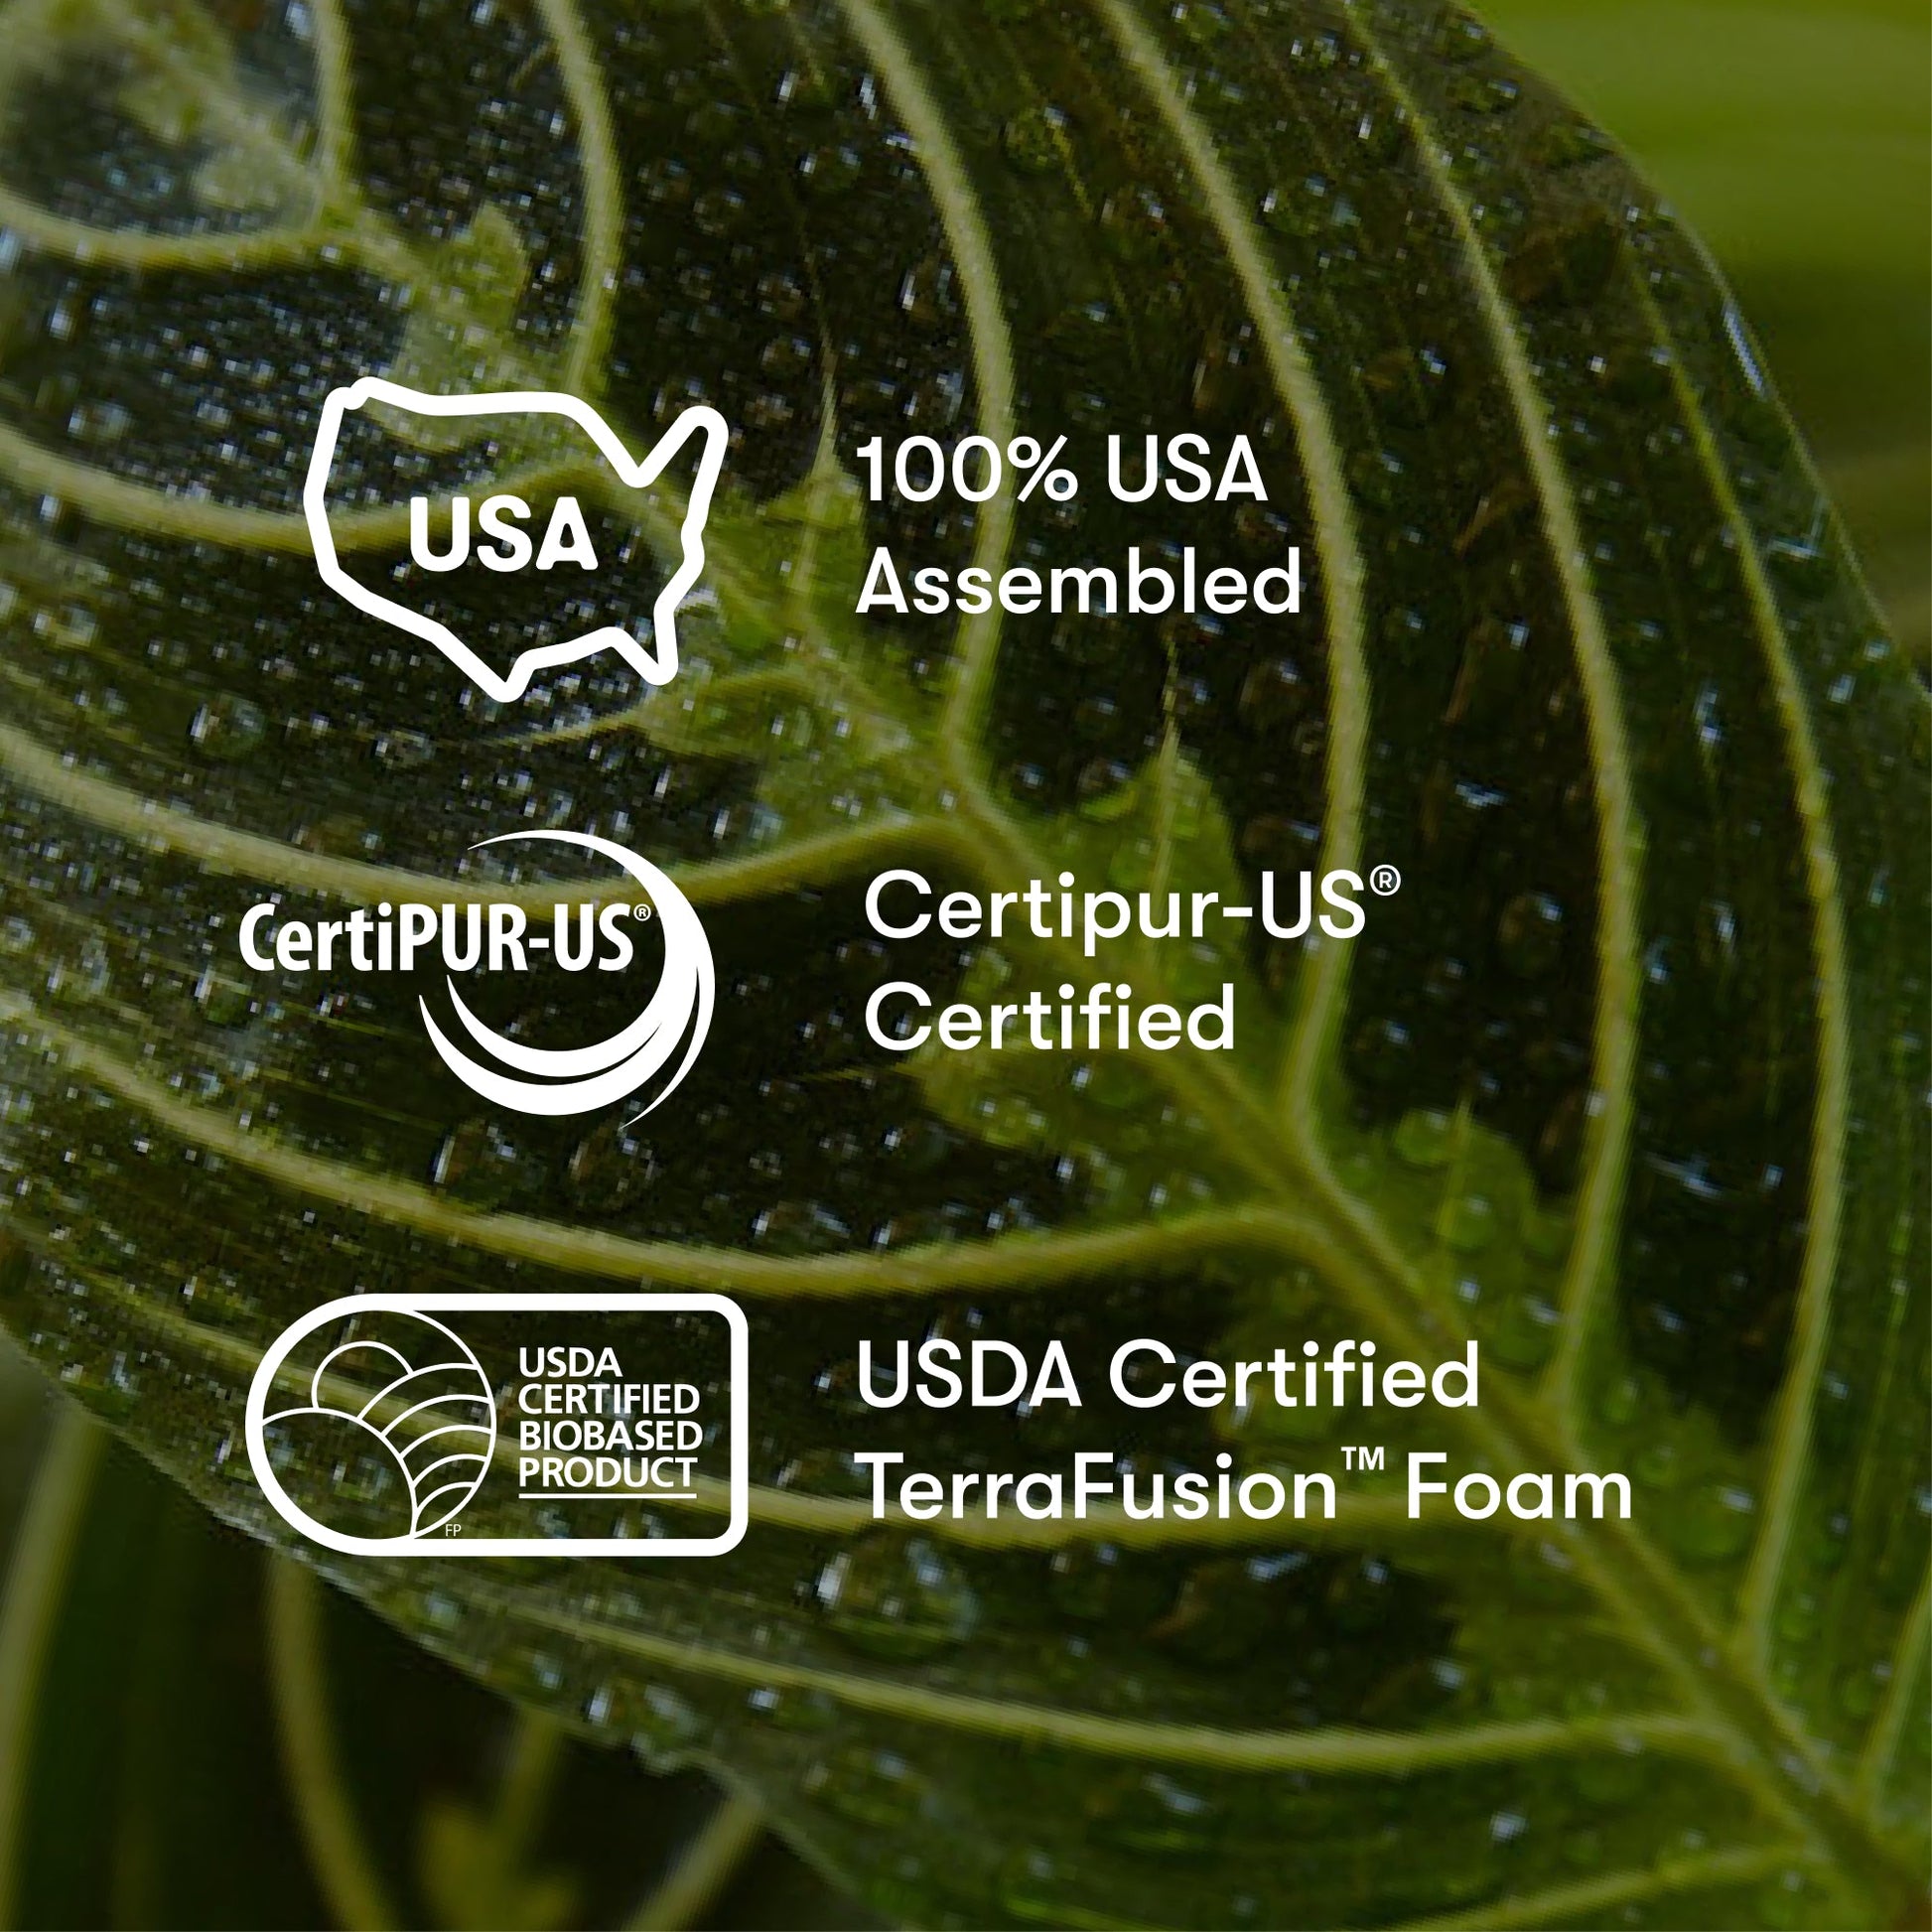 100% USA Assembled. Certipur-US Certified. USDA Certified TerraFusion Foam.